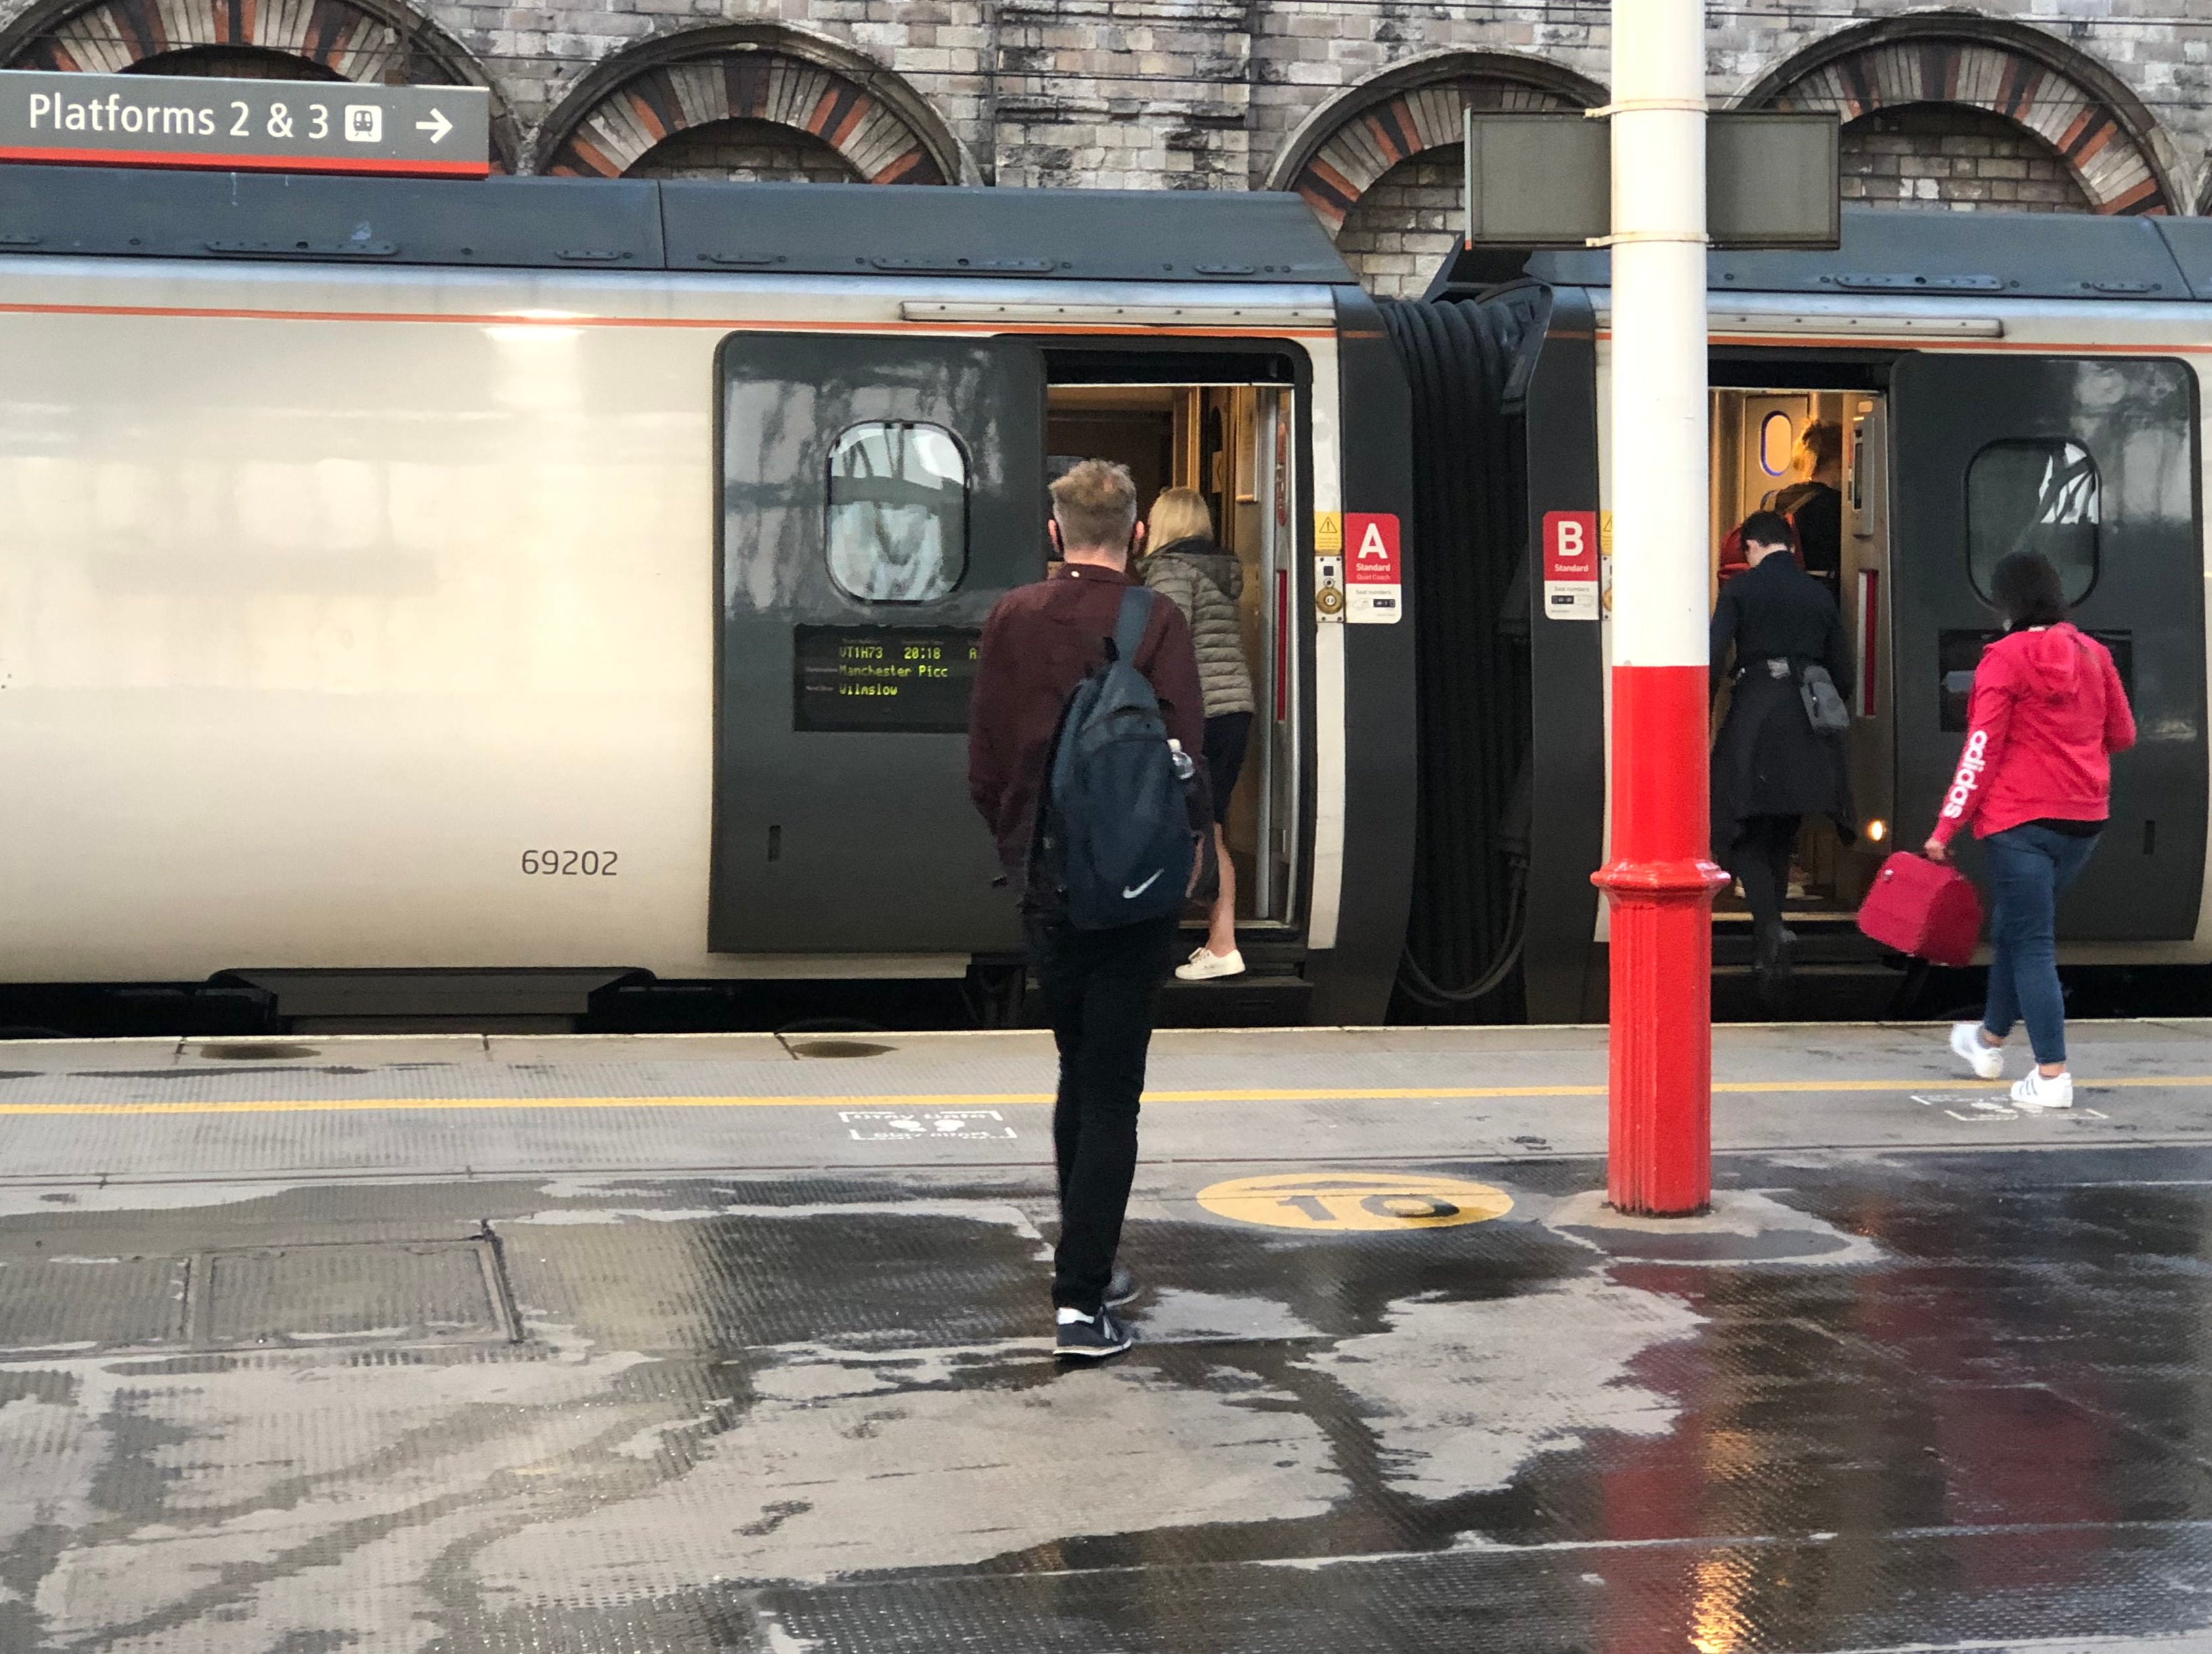 Paying less: Passengers boarding an Avanti West Coast train at Crewe